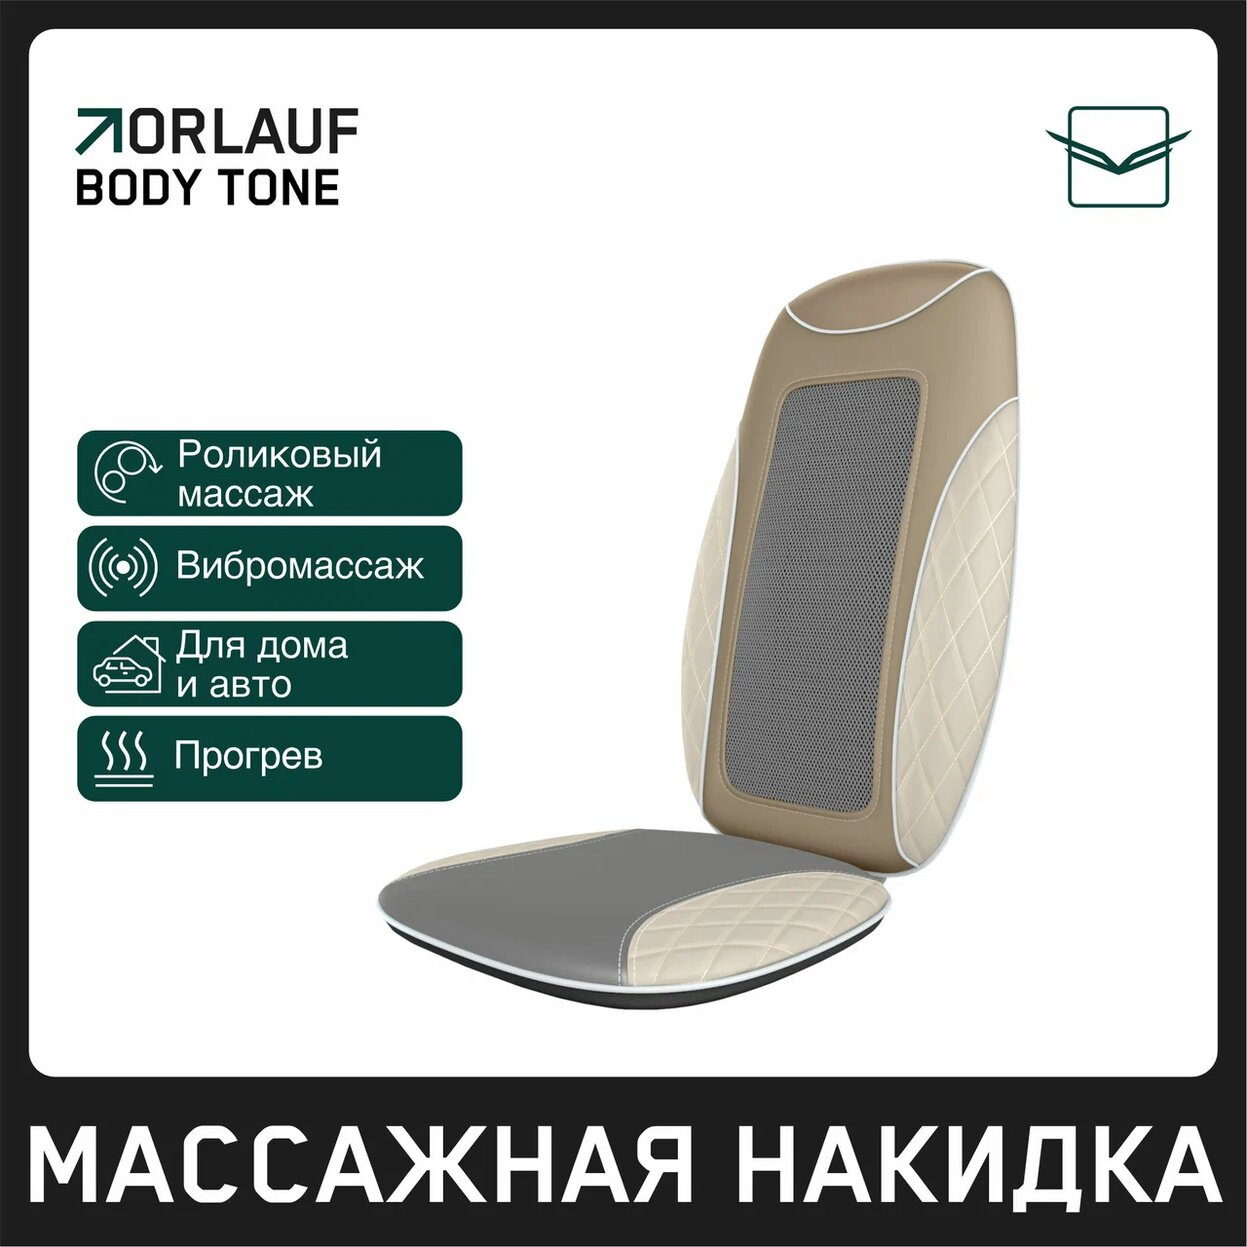 Body Tone в Волгограде по цене 15400 ₽ в категории каталог Orlauf